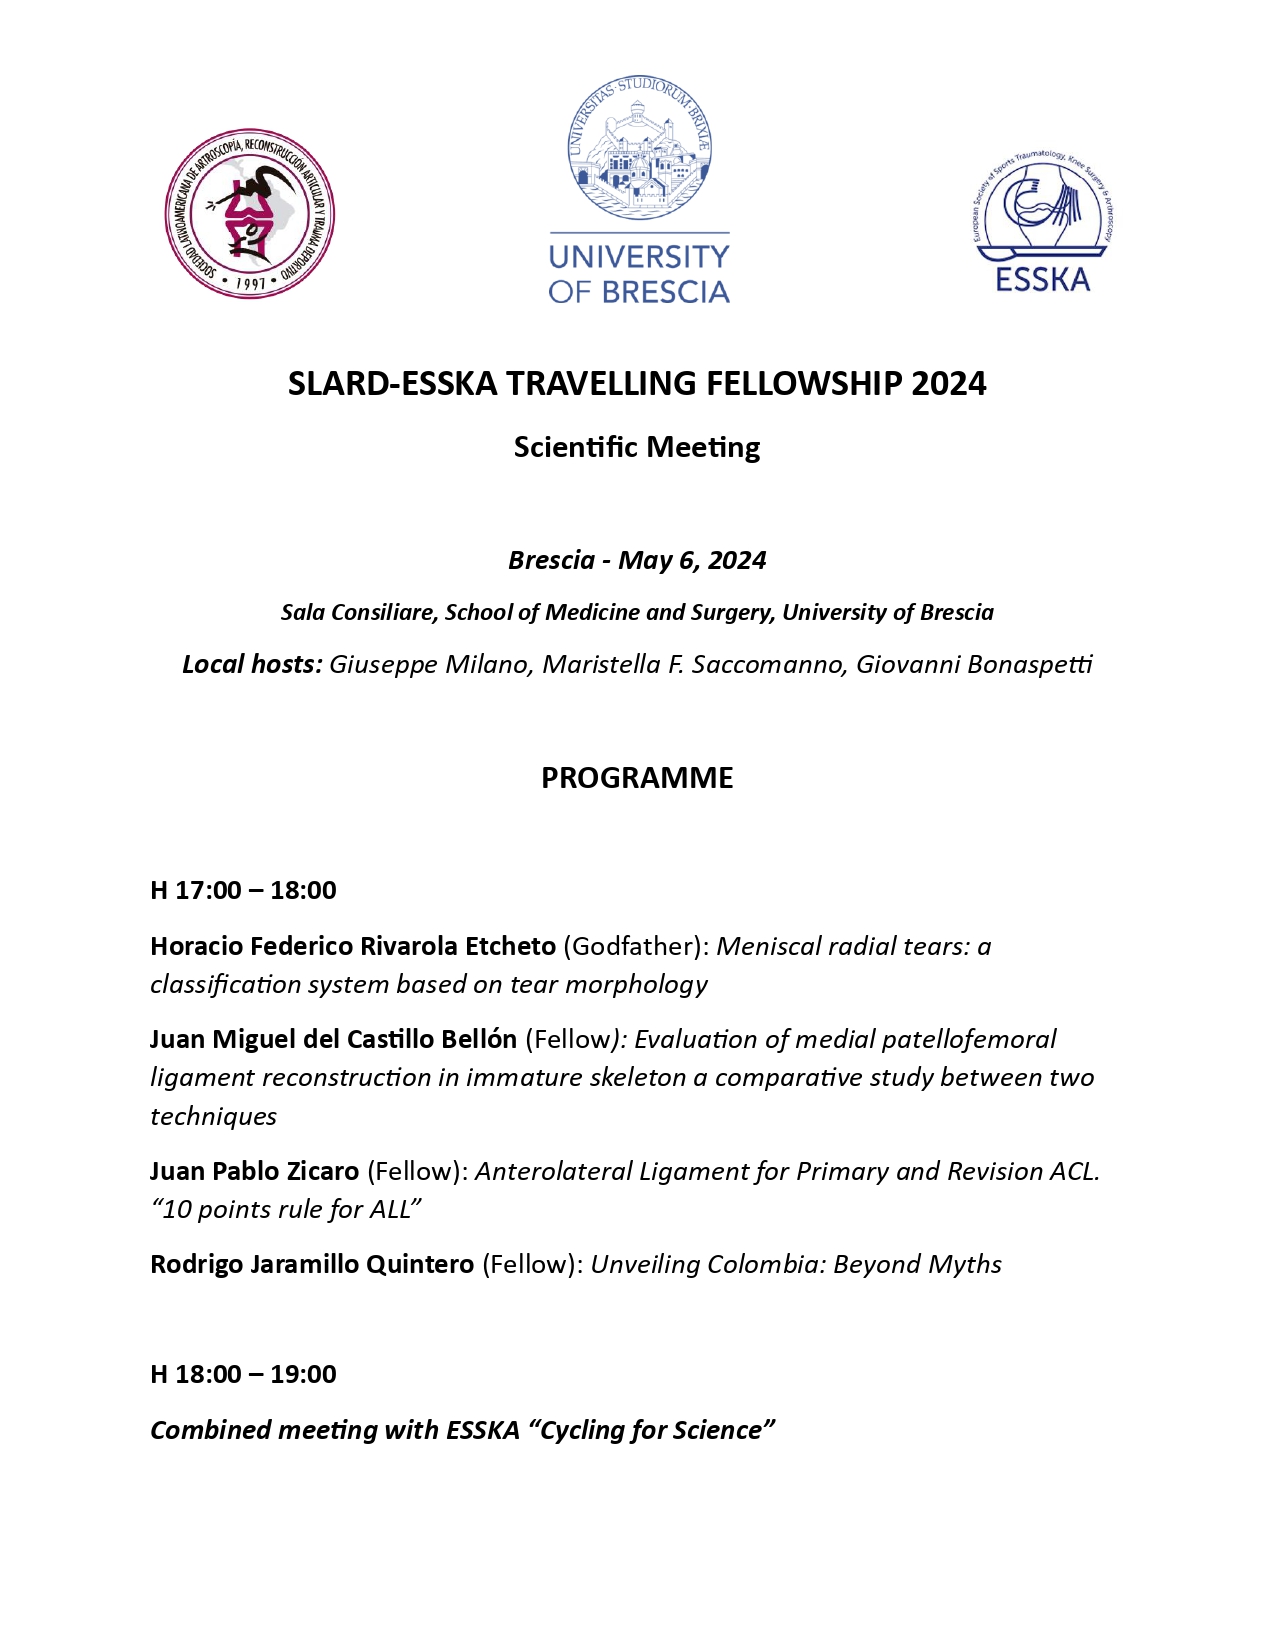 SLARD-ESSKA 2024 Travelling Fellowship (Scientific Program)